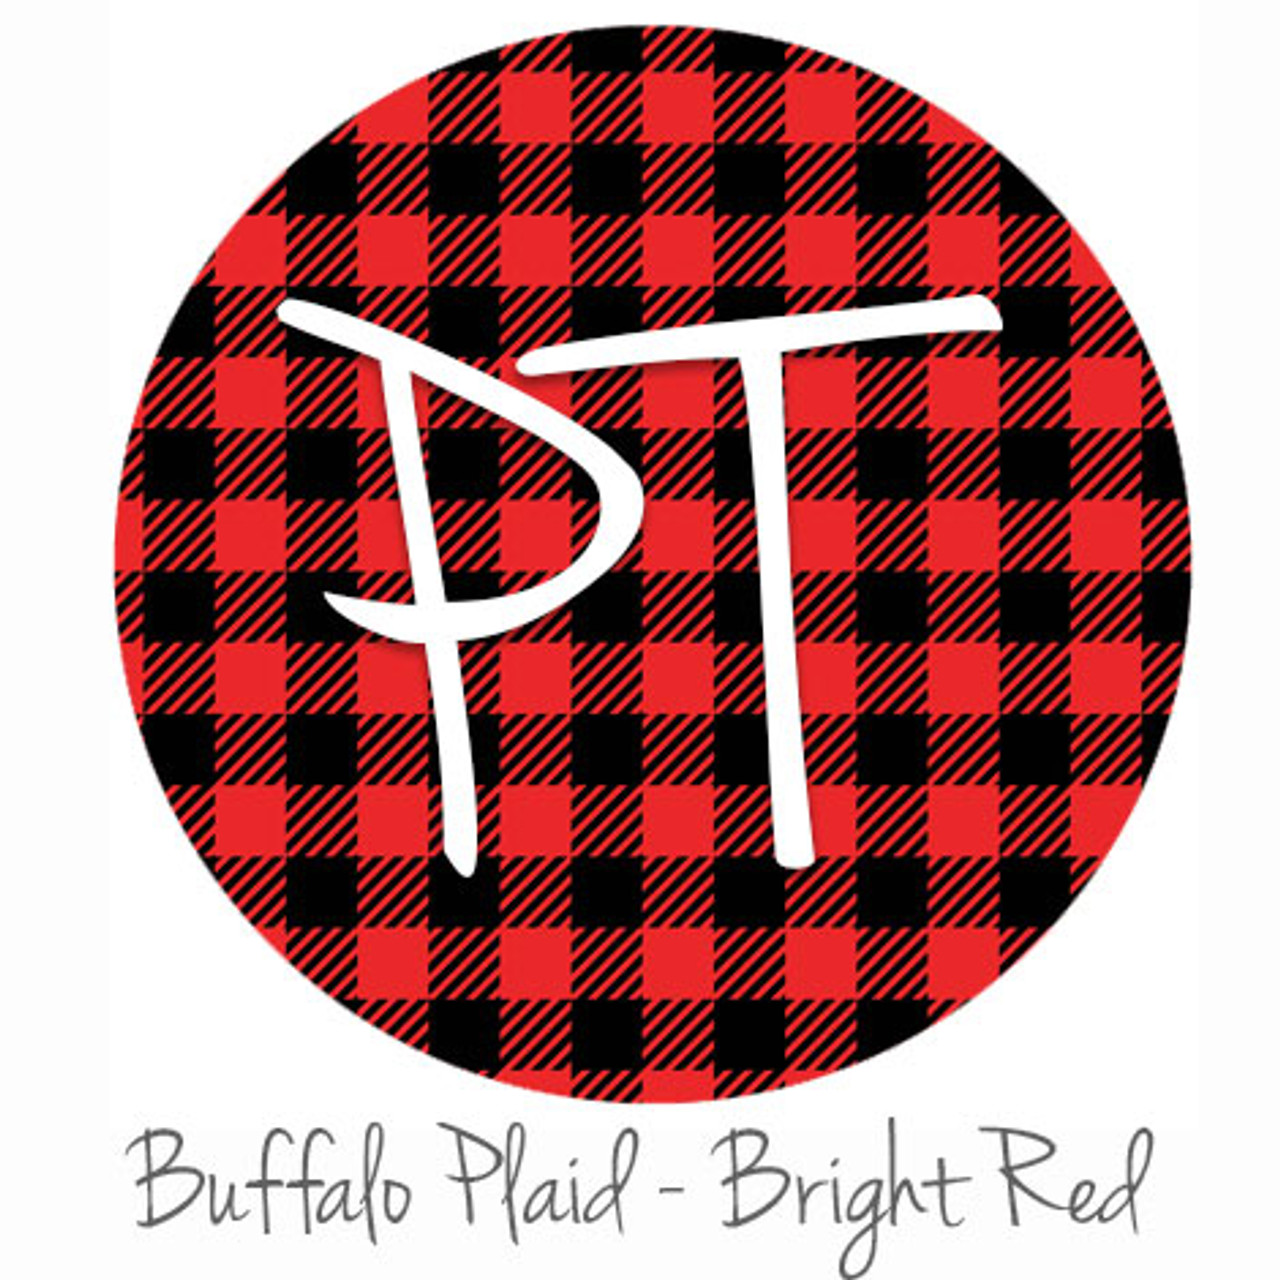  18 x 12 Buffalo Plaid HTV Red Black Check Printed Heat Transfer  Vinyl Craft Pattern Sheet : Arts, Crafts & Sewing